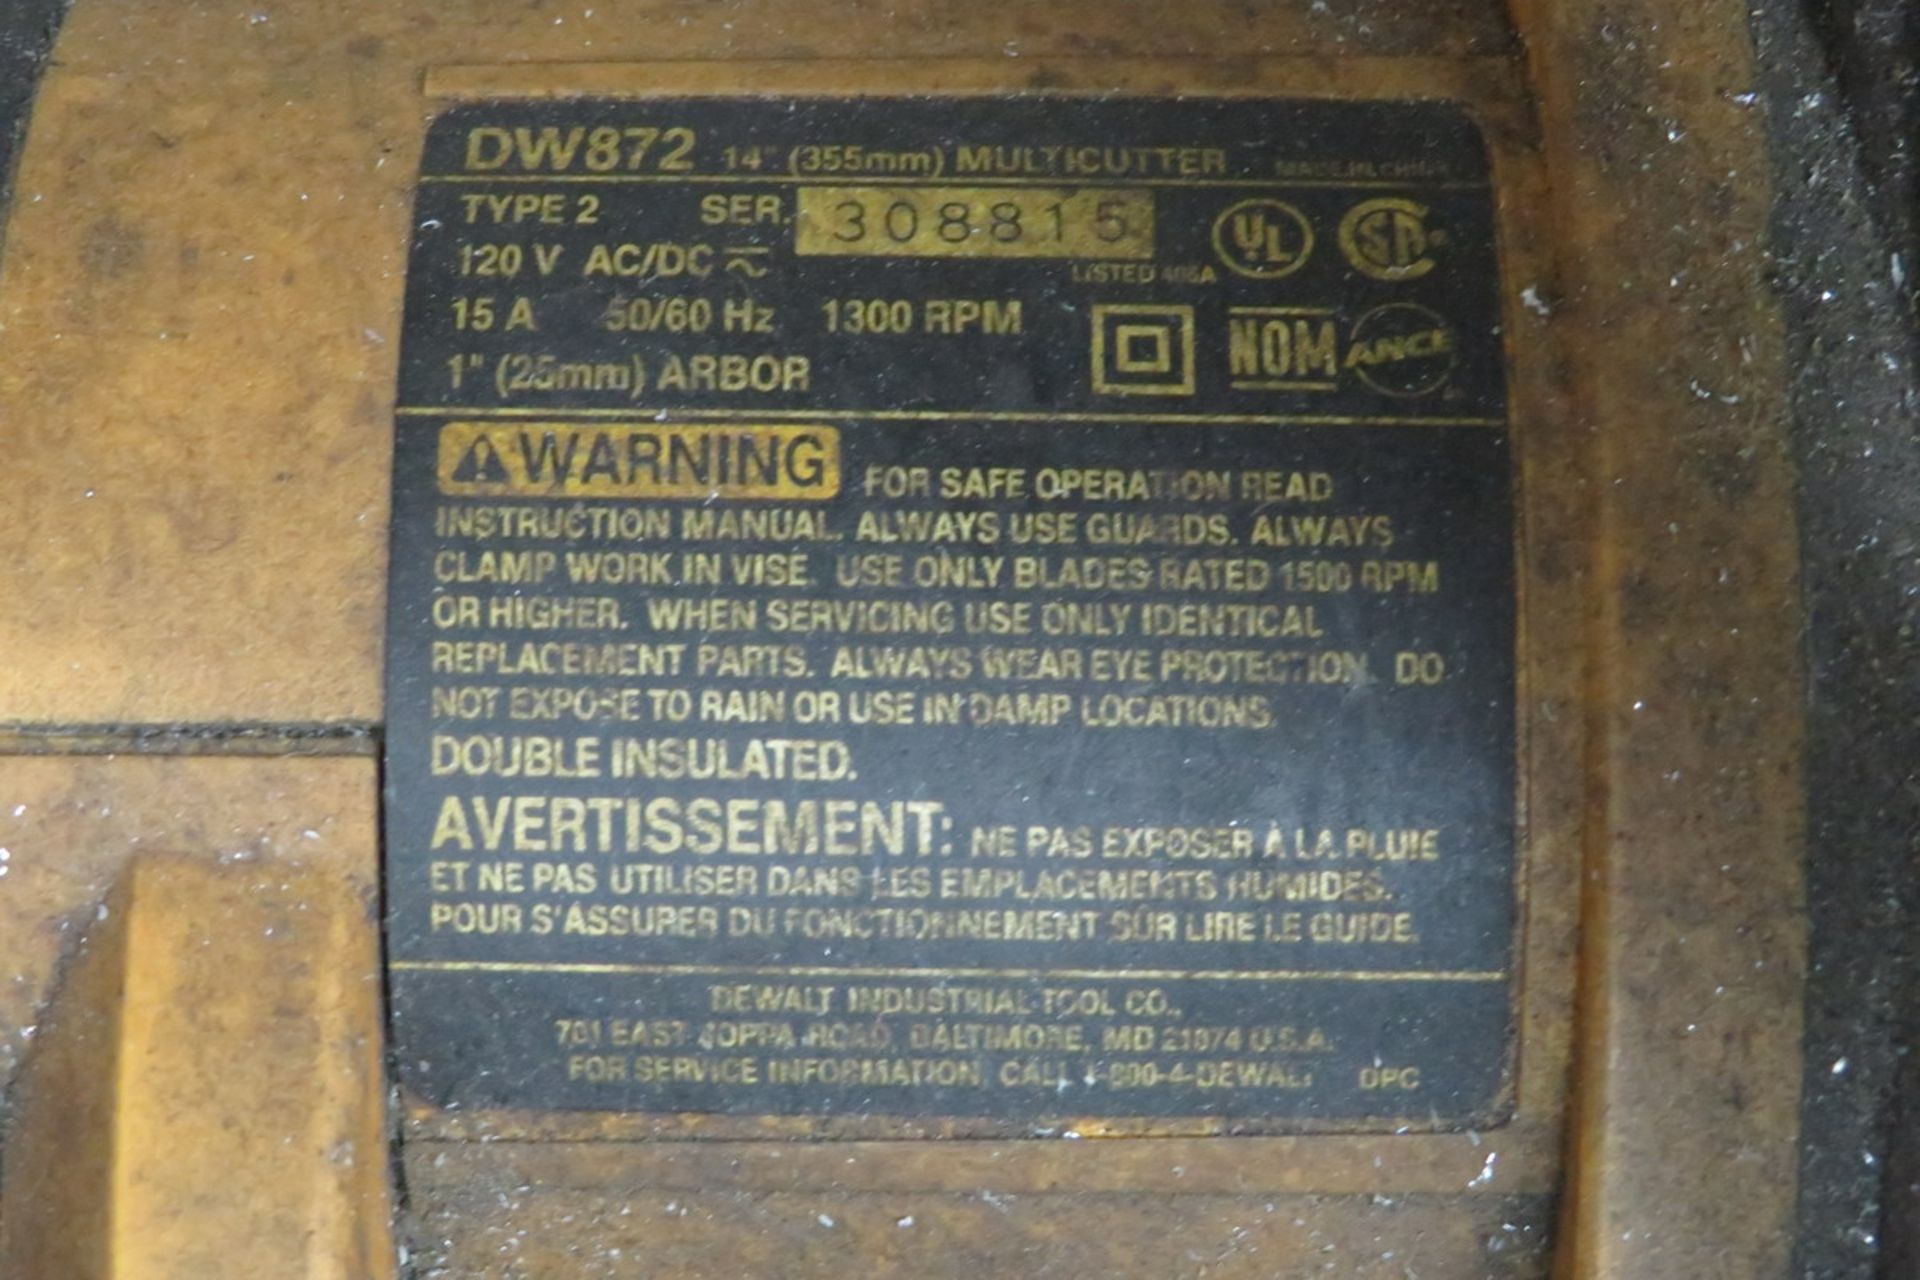 DeWalt Model DW872, 14 in. Multi-Cutter Saw, 110V - Image 2 of 2